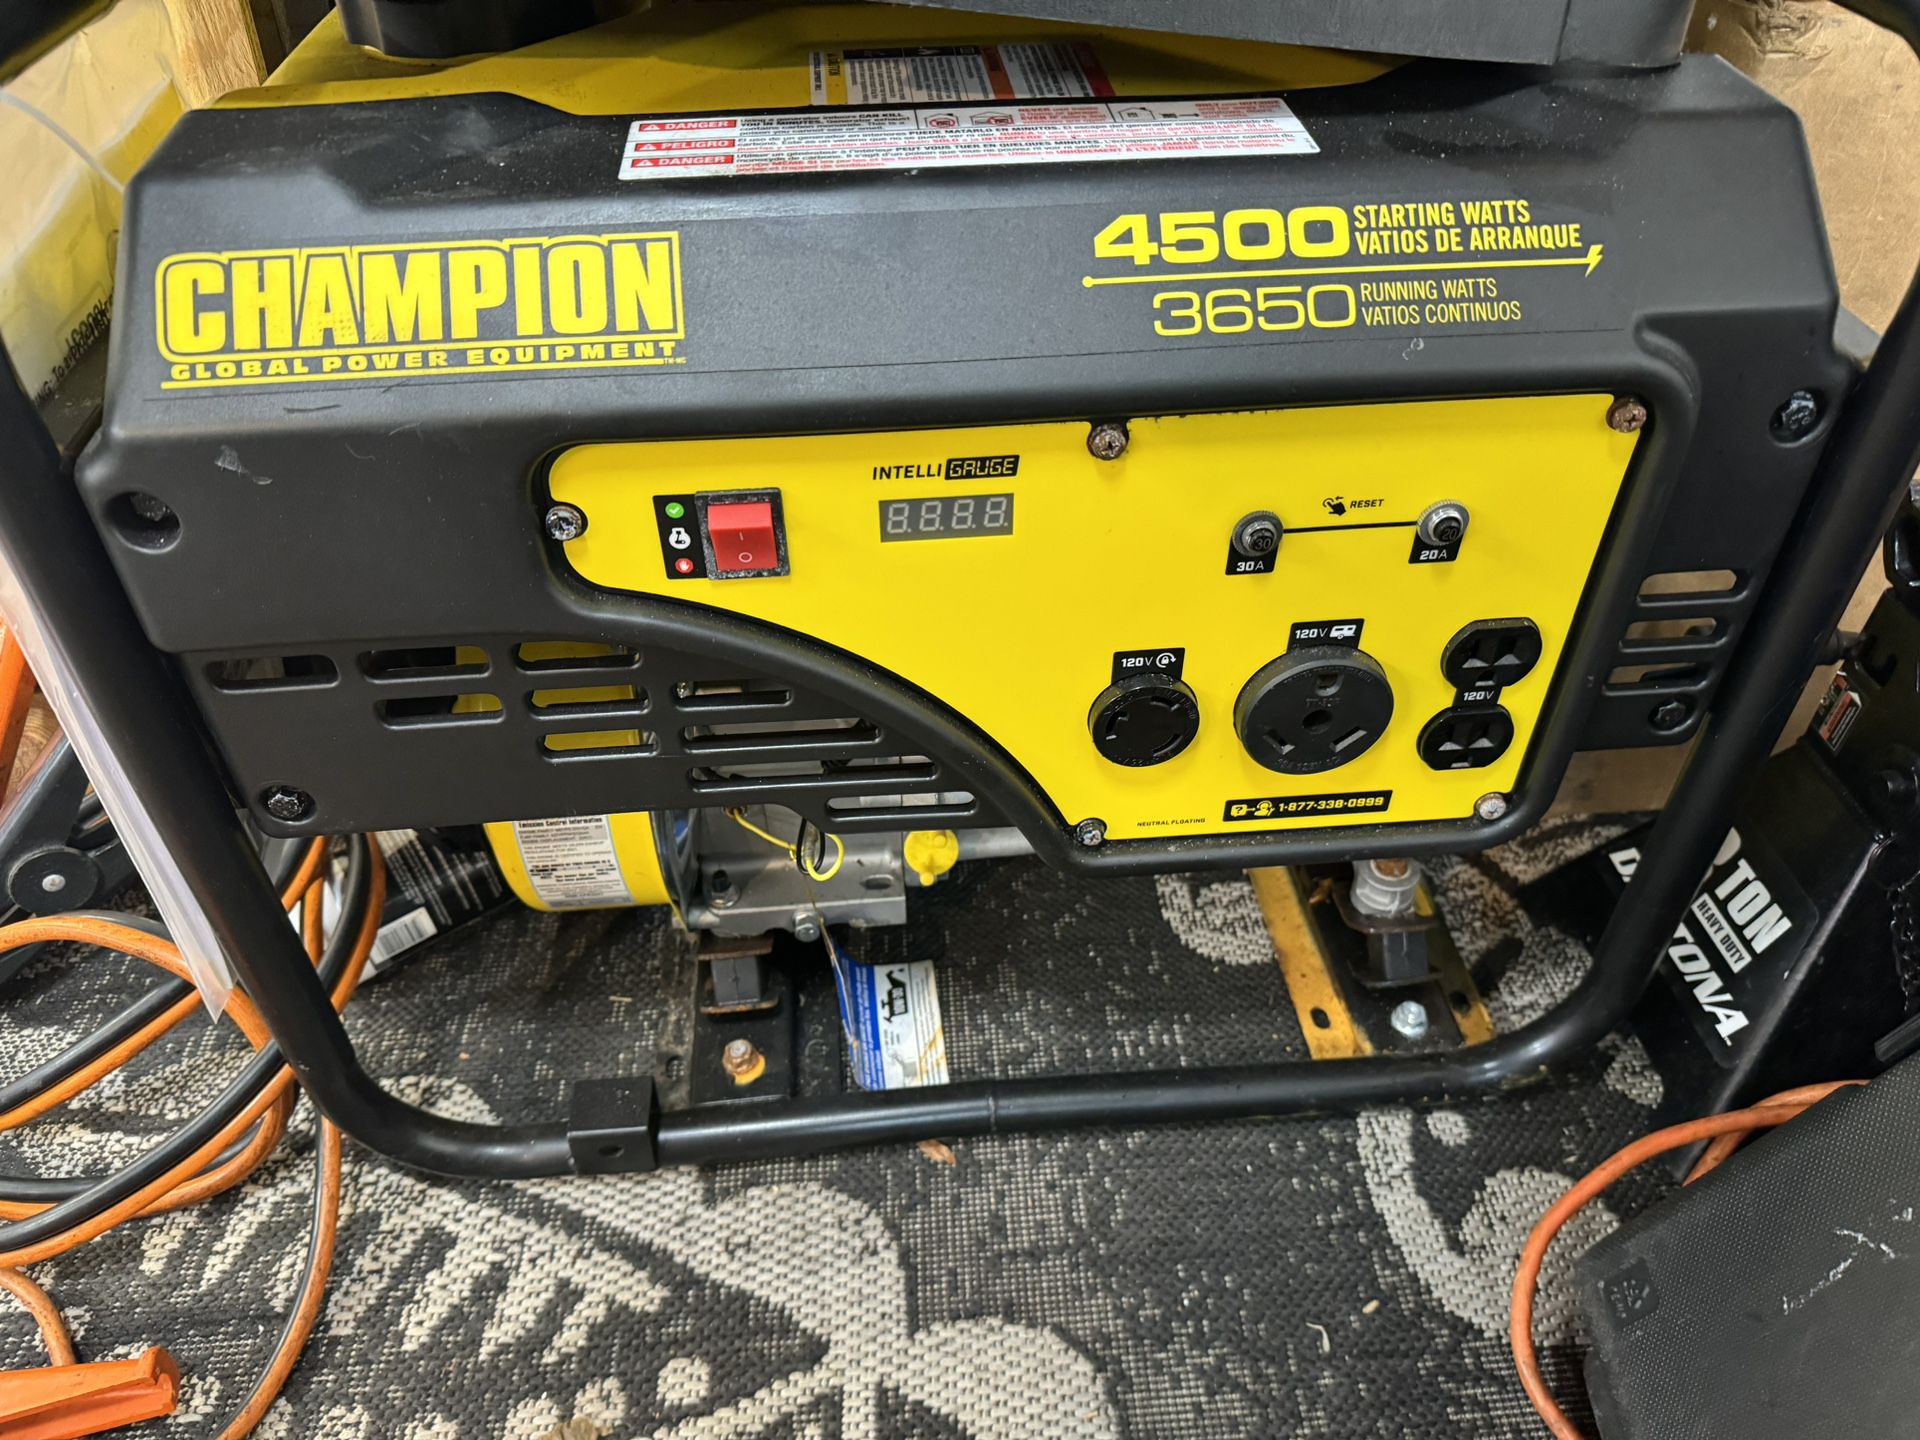 Champions generator 4200